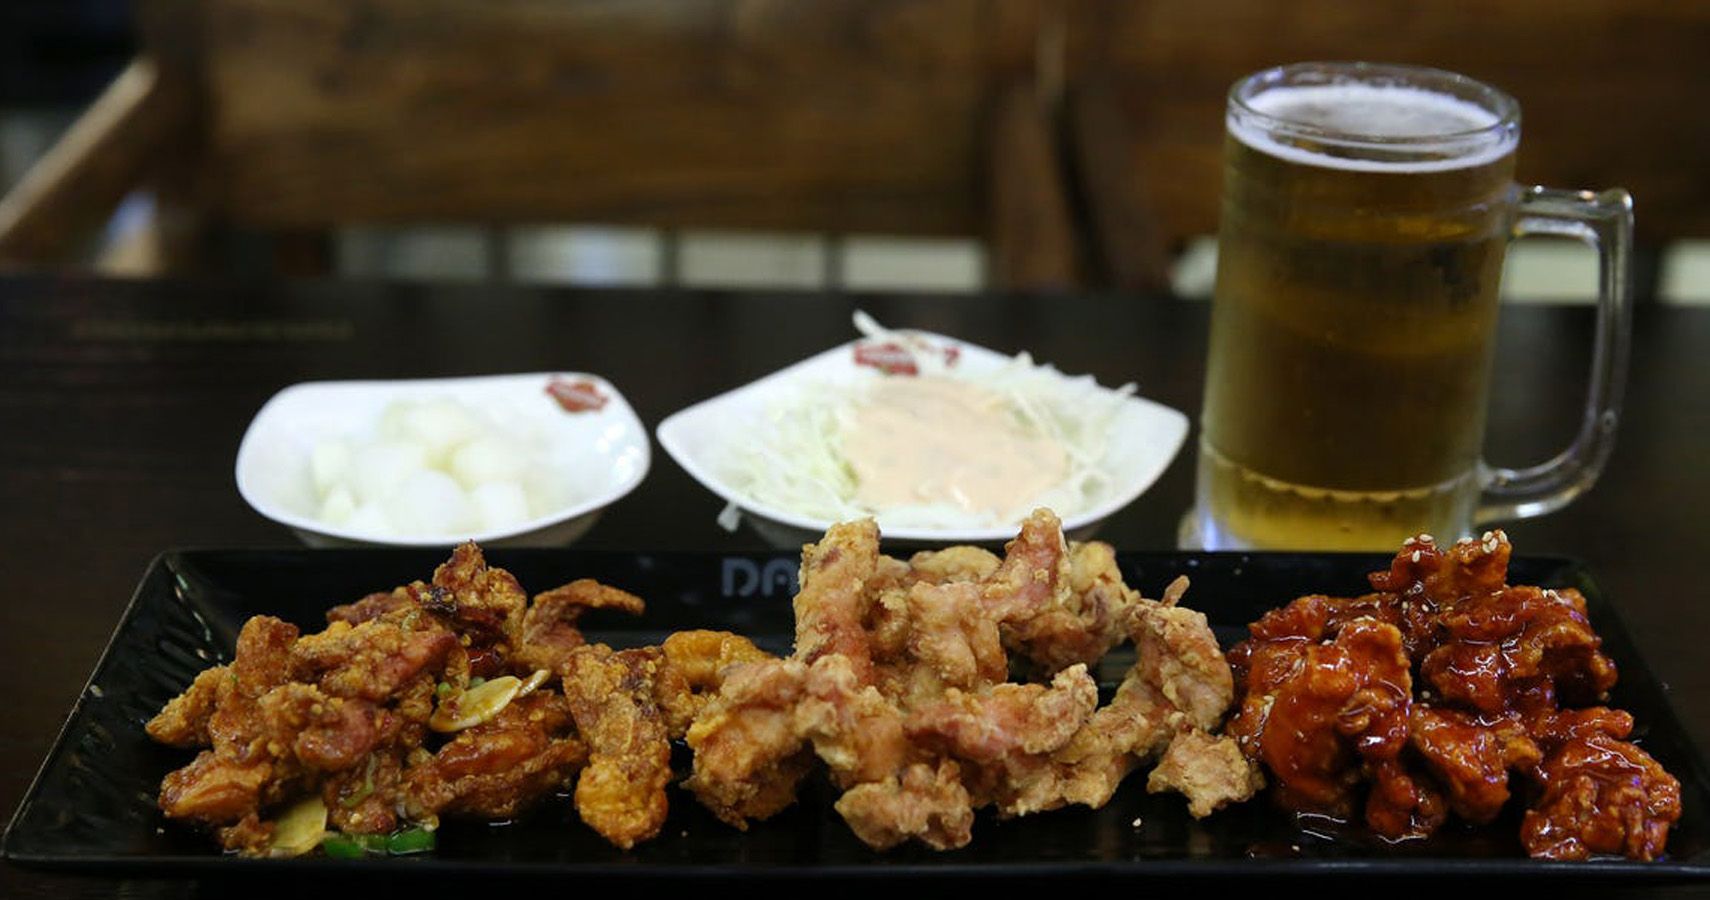 10 Restaurants That Have The Best Fried Chicken In Korea